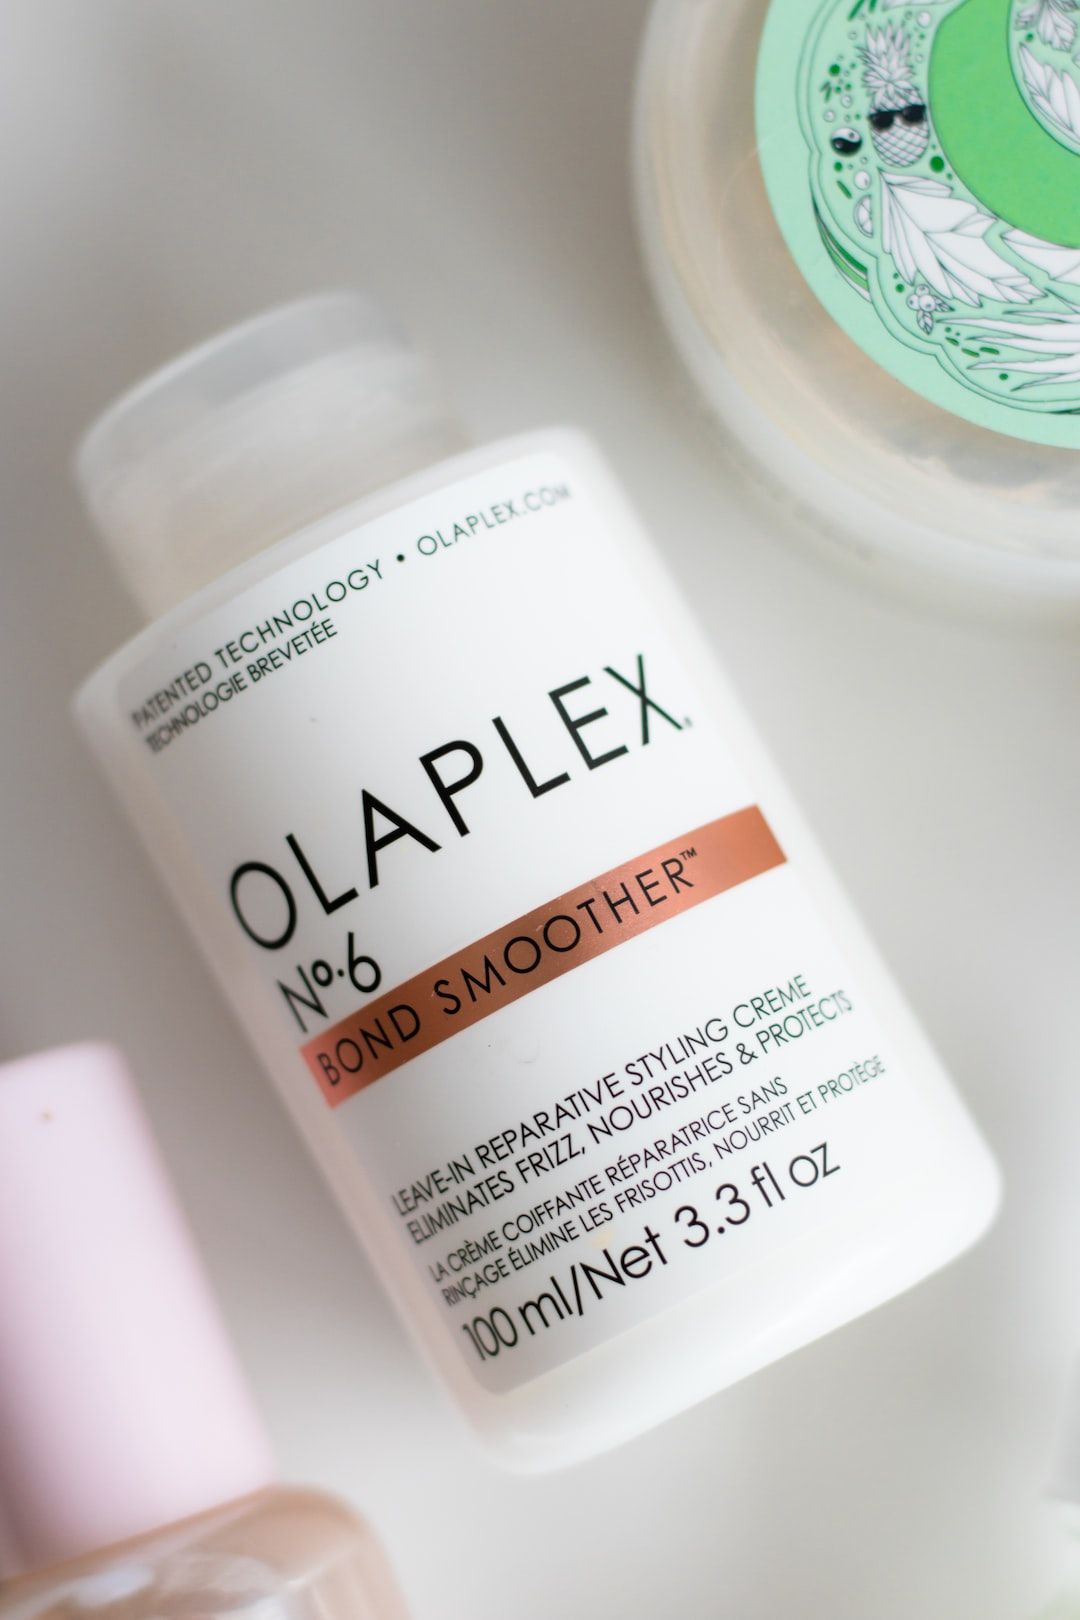 OLAPLEX beauty product